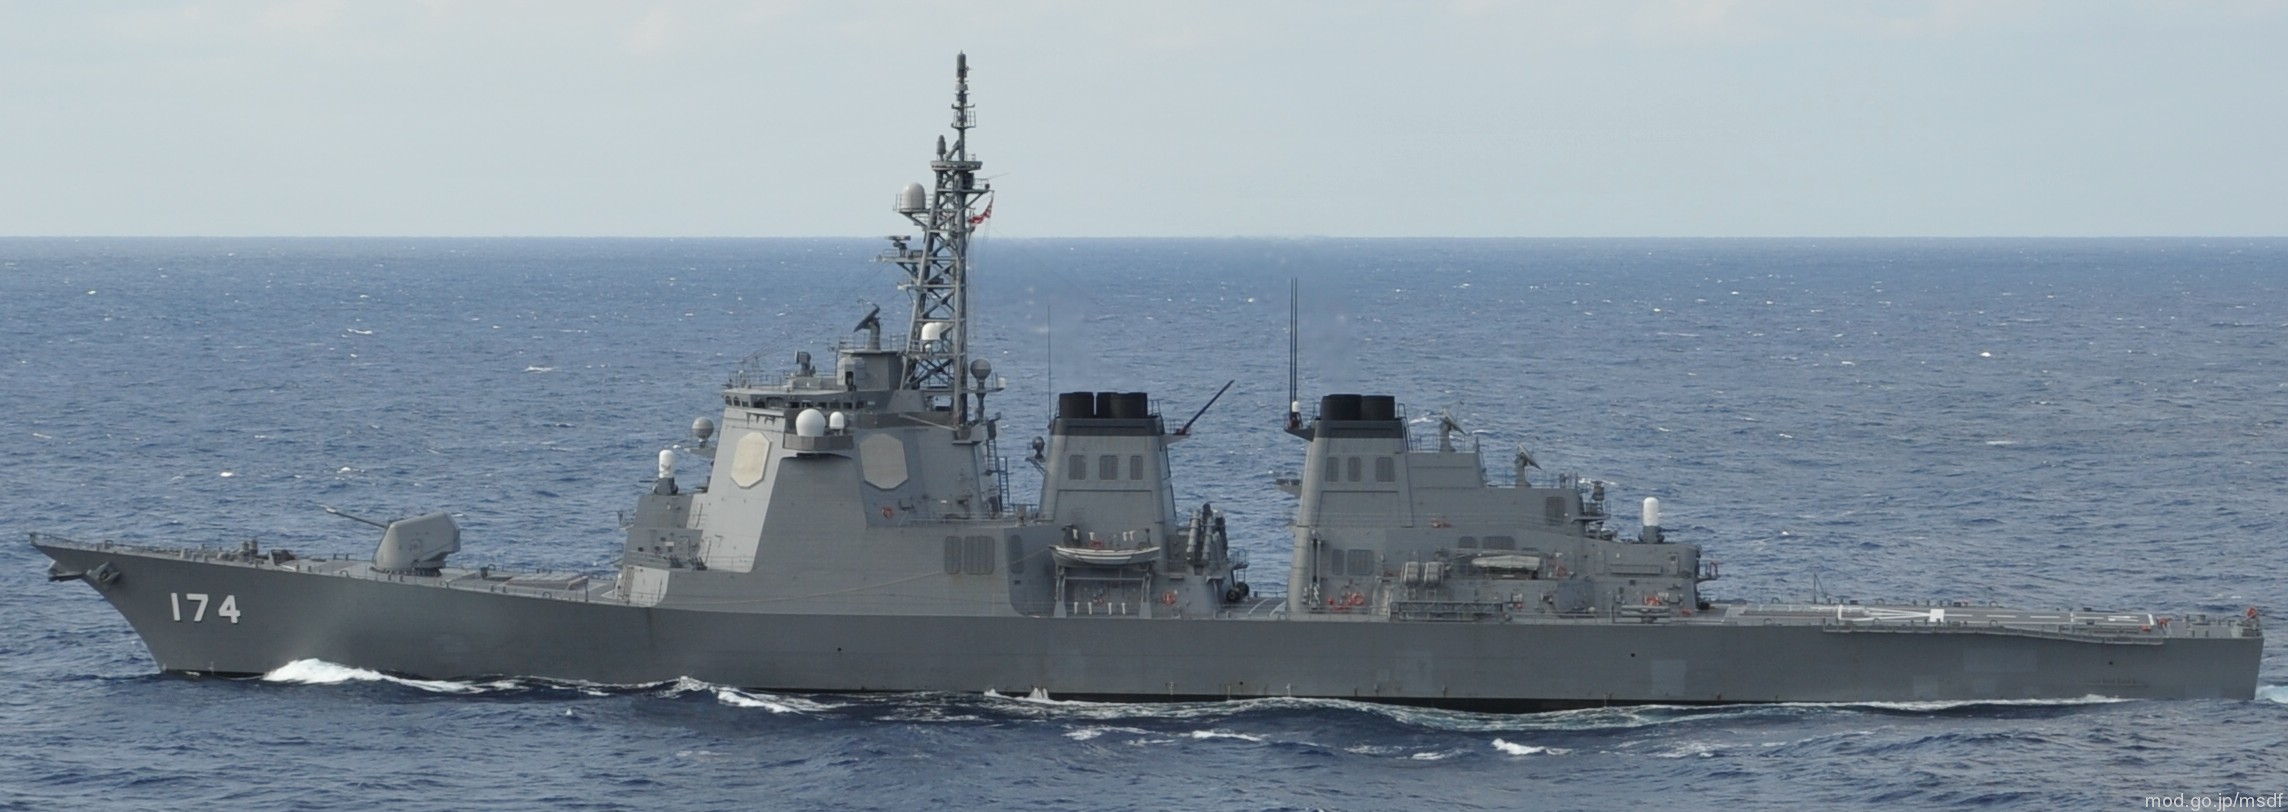 ddg-174 js kirishima kongo class guided missile destroyer aegis japan maritime self defense force jmsdf 06